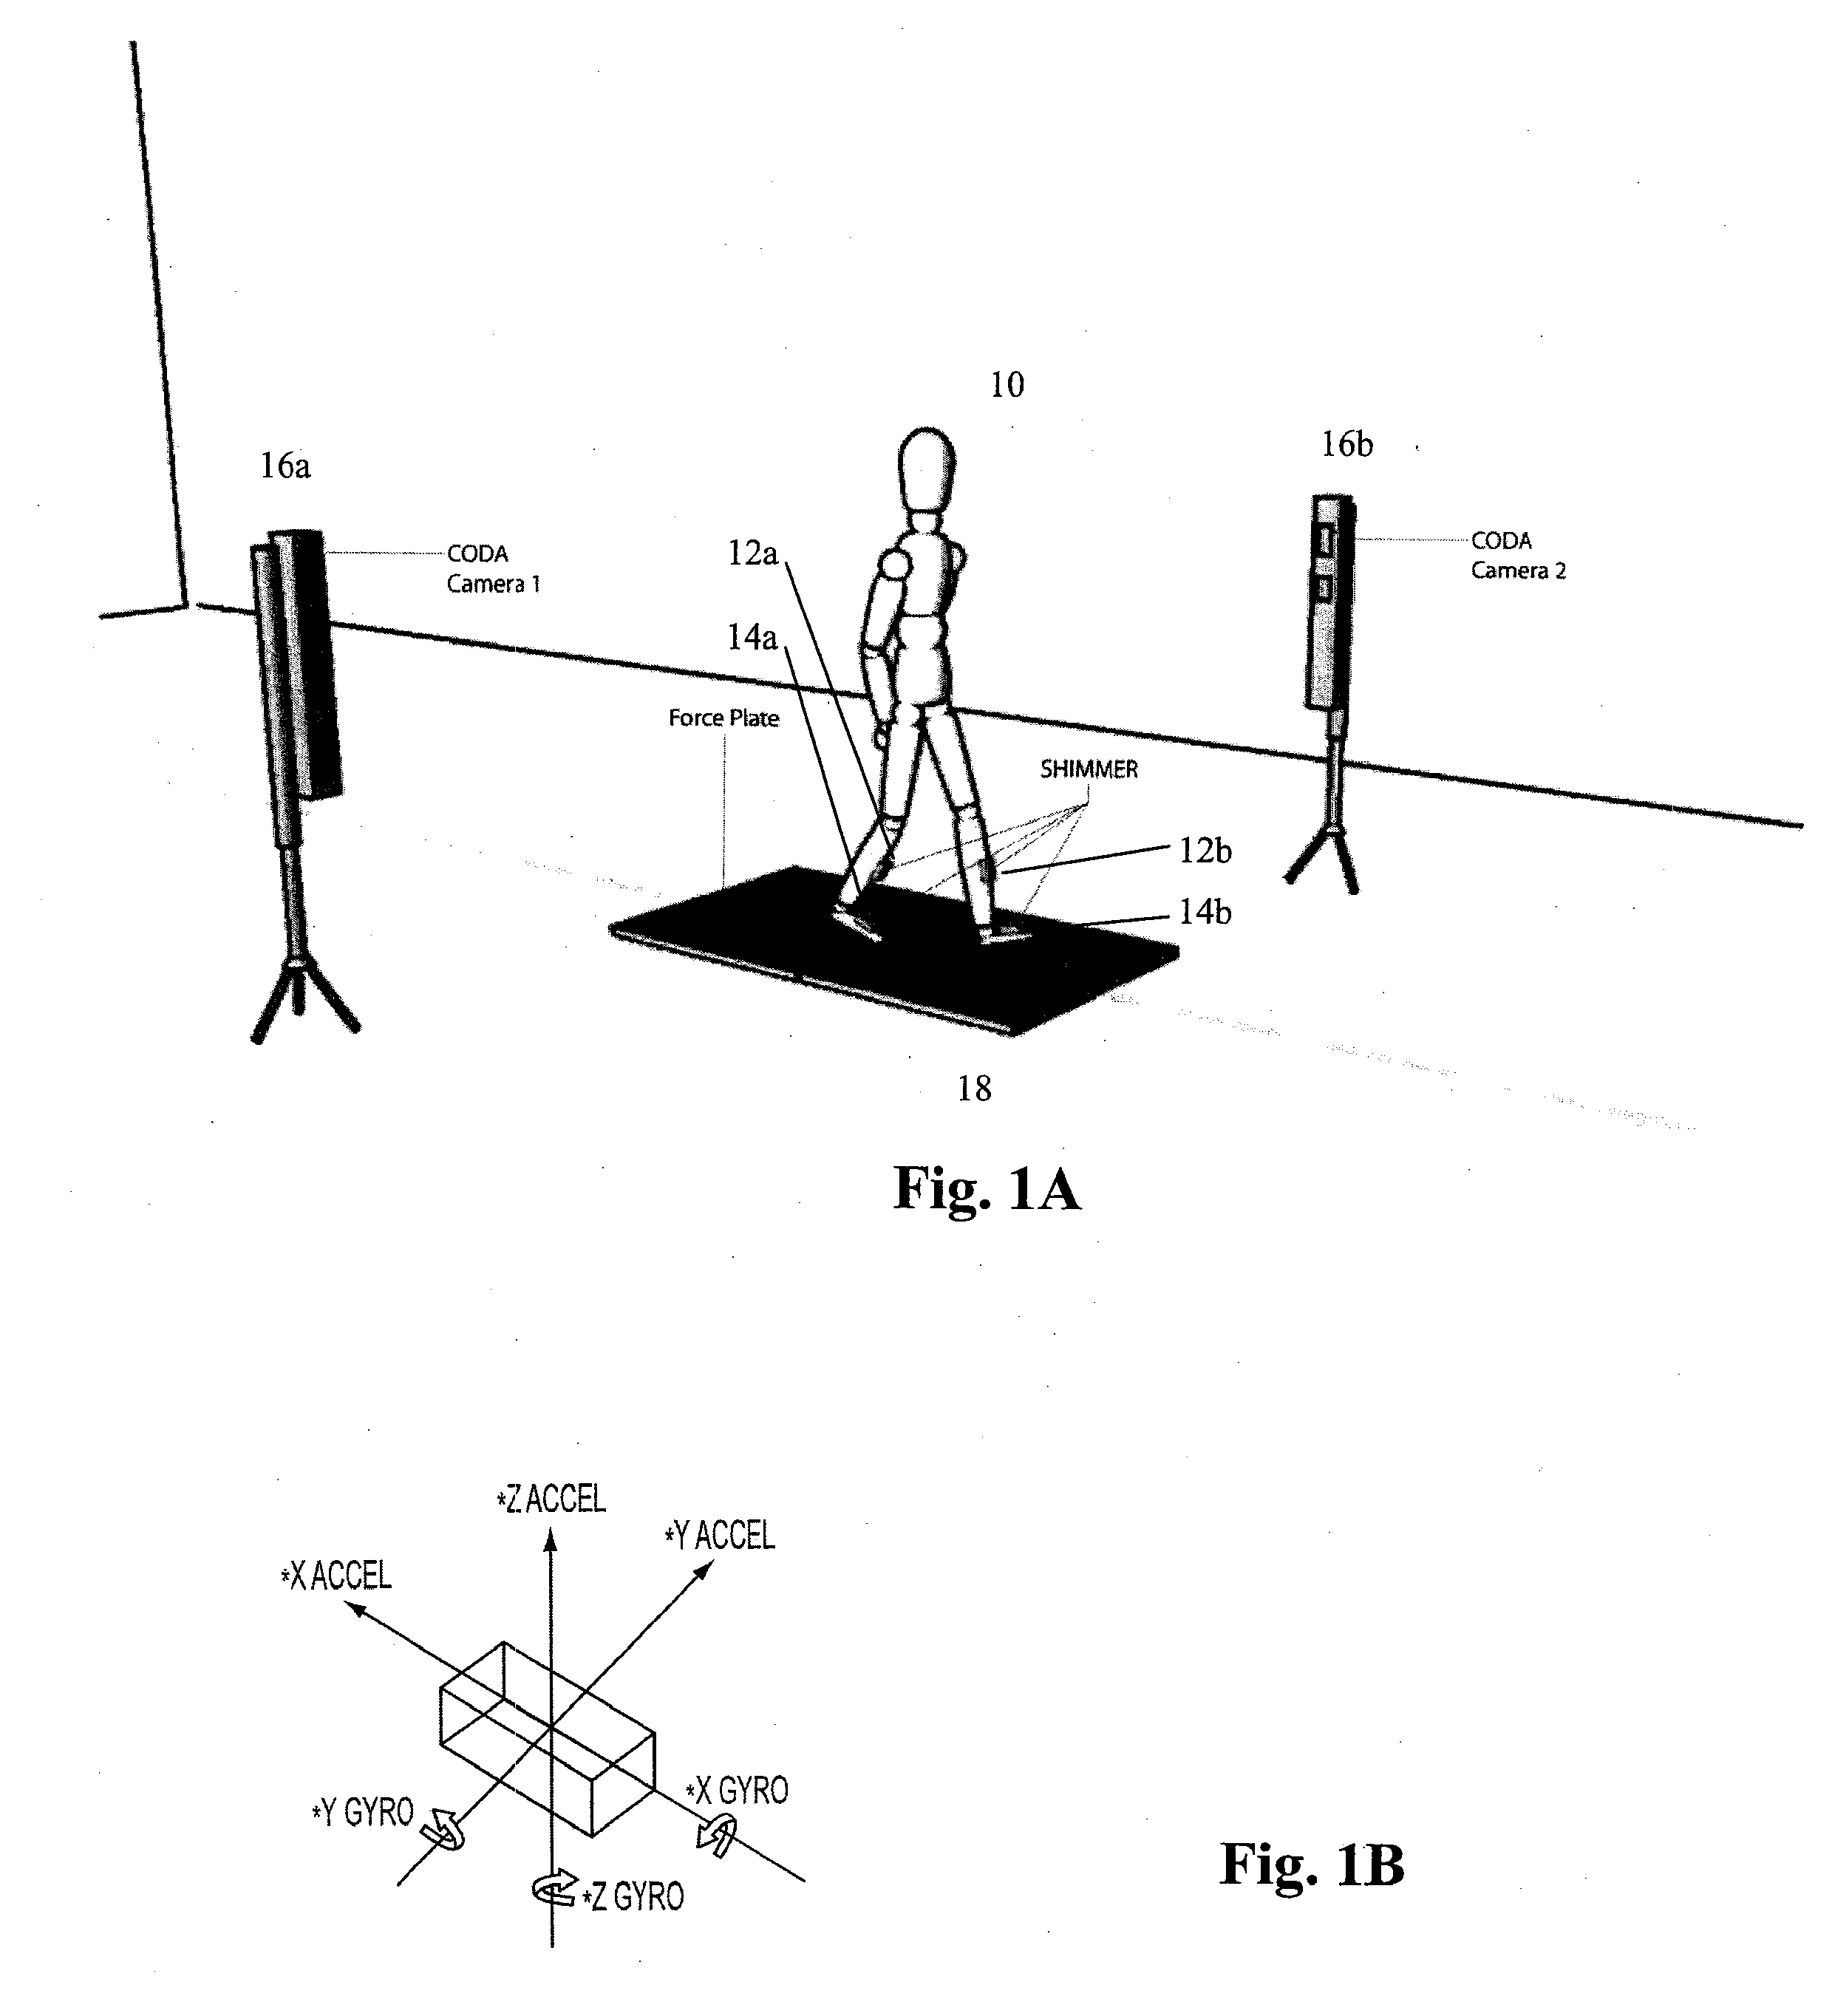 Calculation of minimum ground clearance using body worn sensors